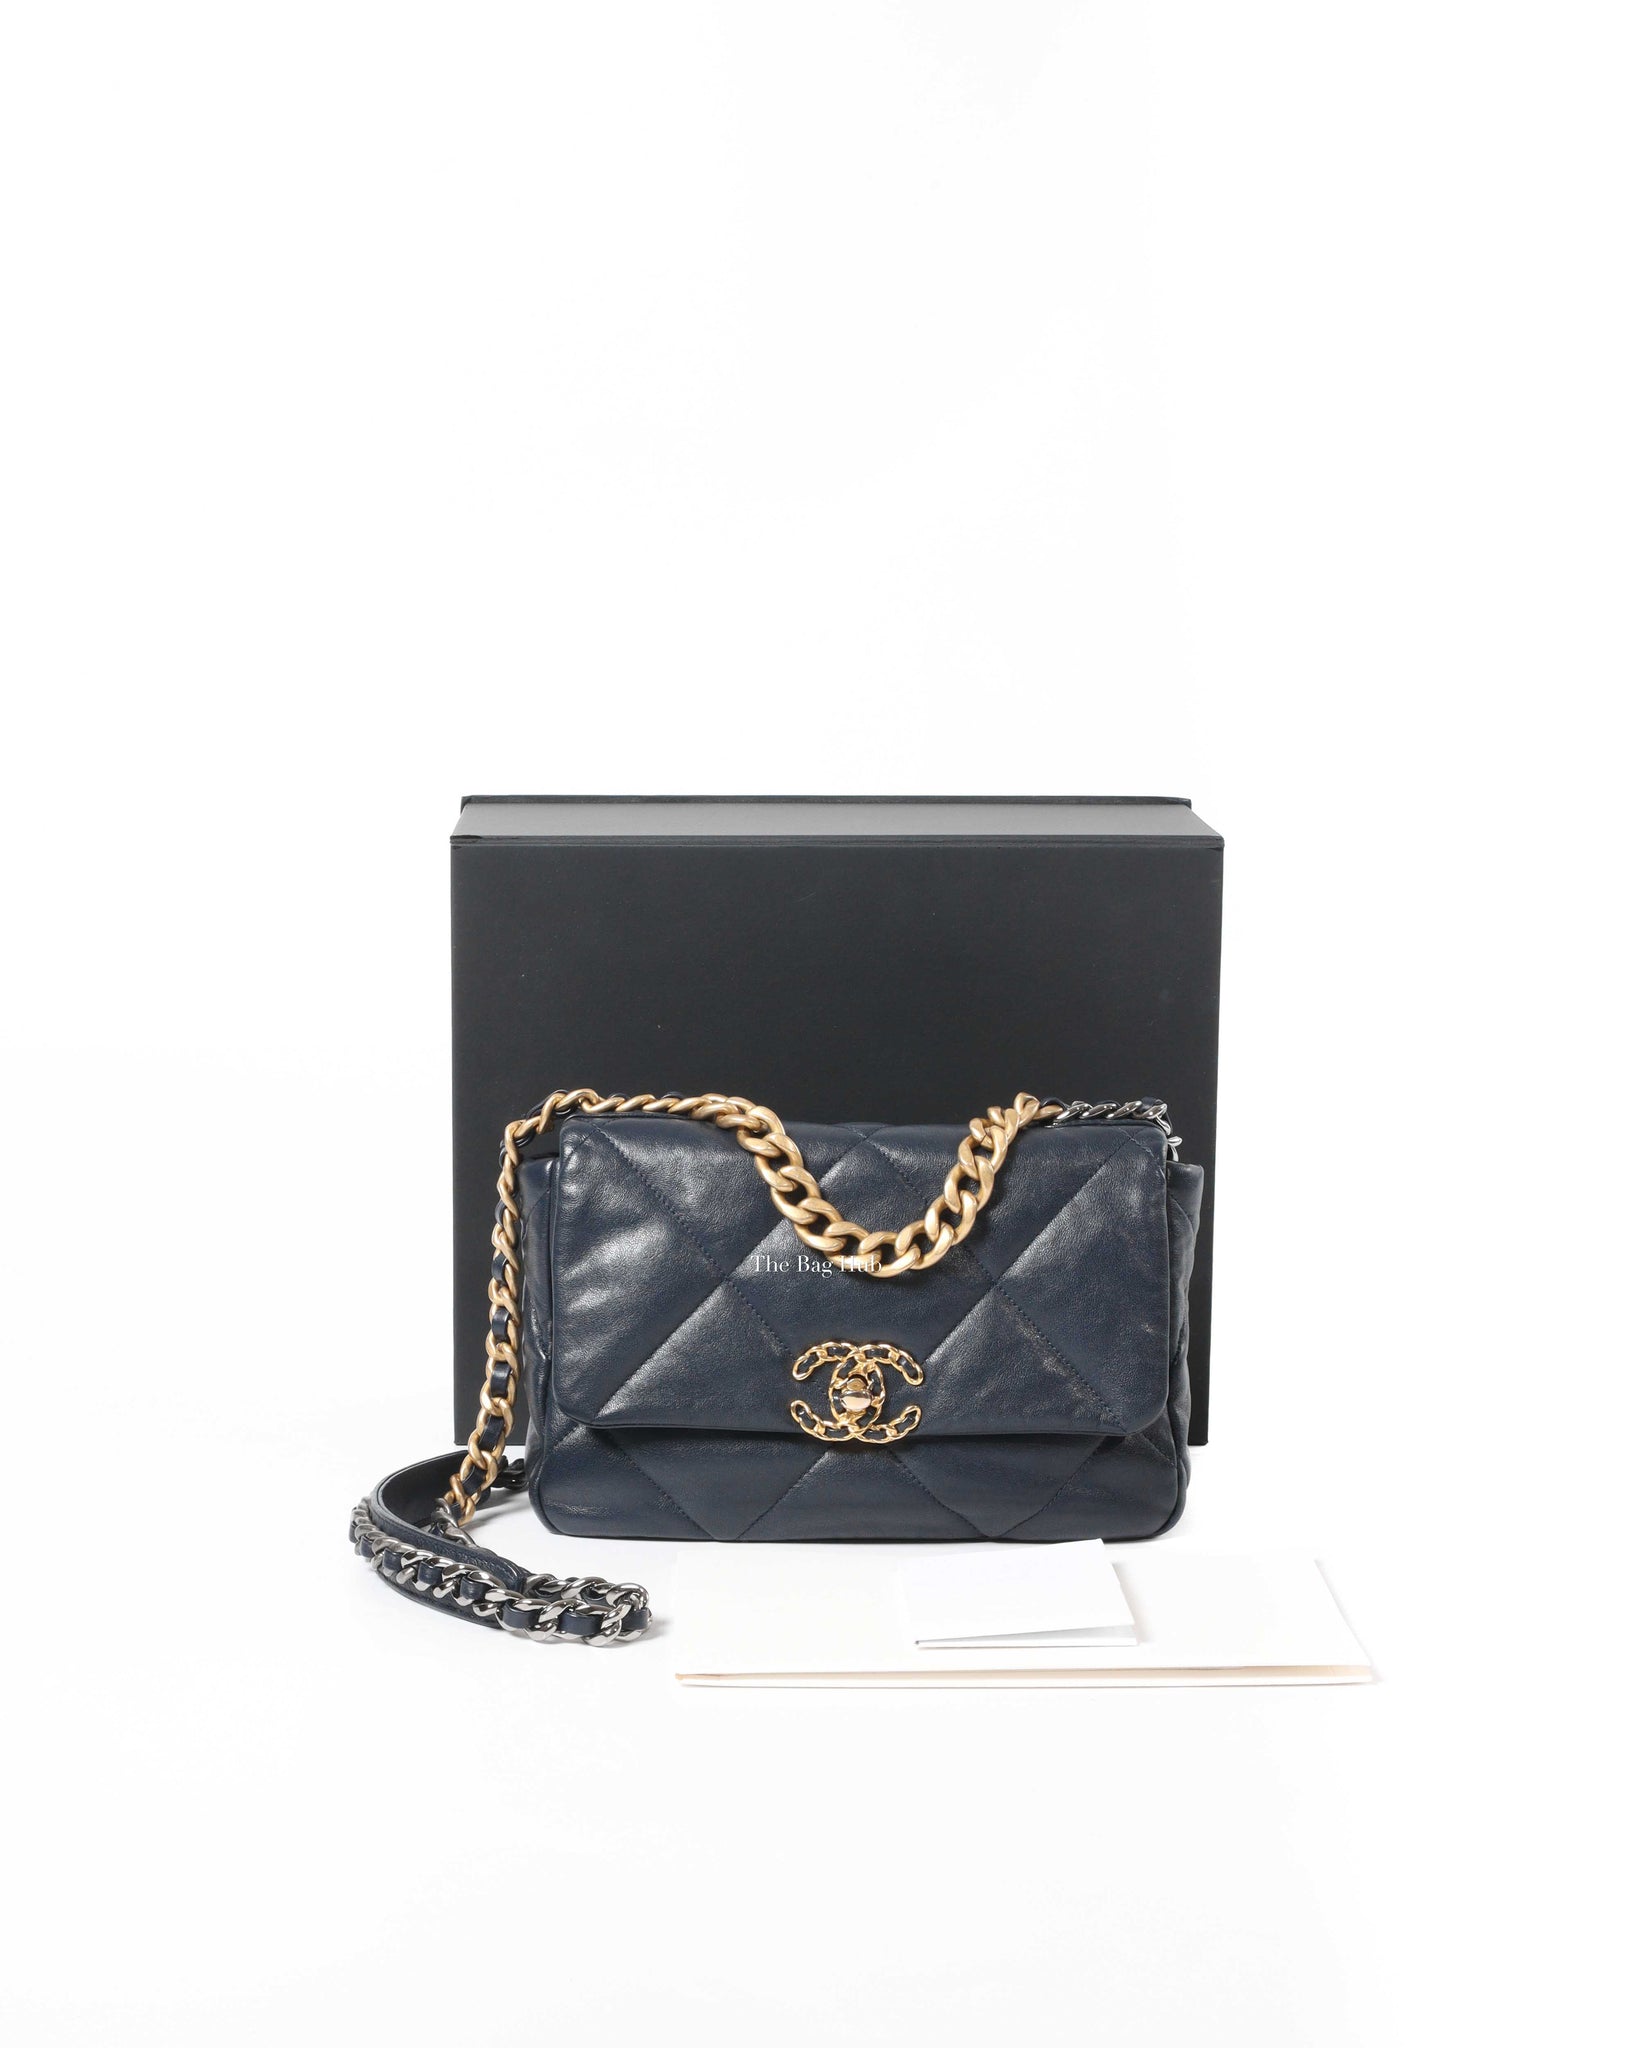 Chanel Chanel 19 Handbag